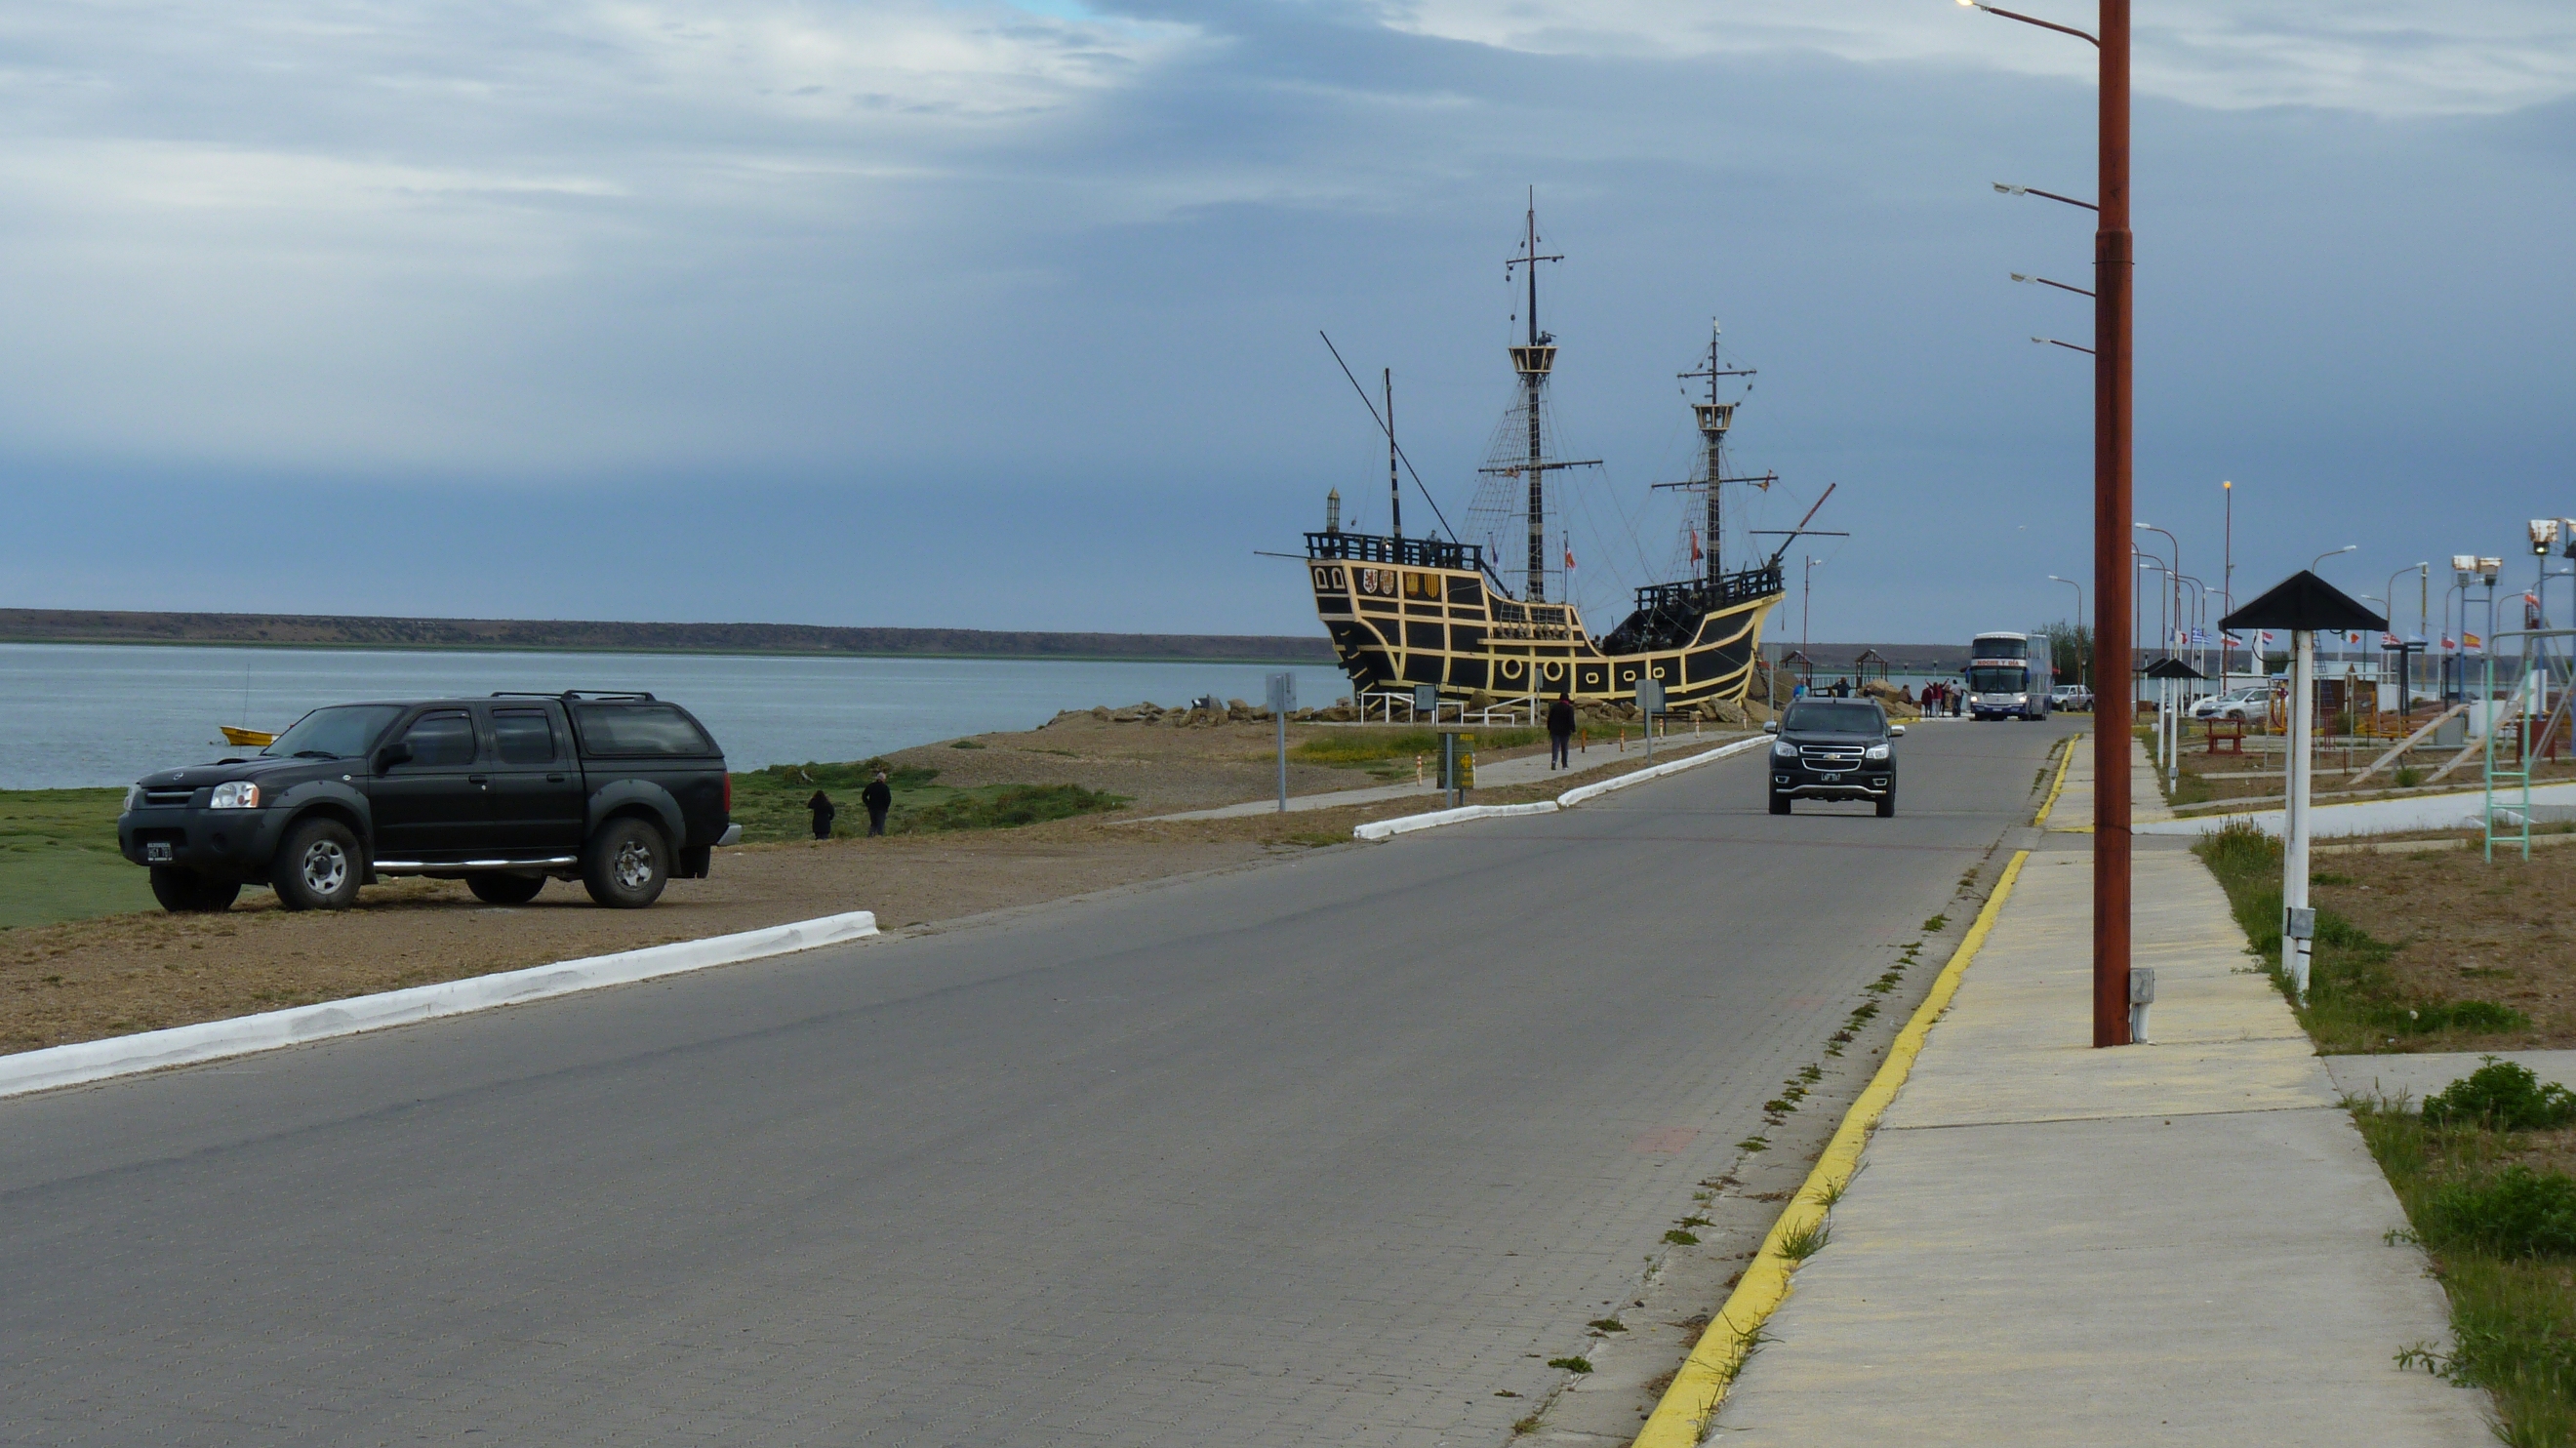 Foto: Réplica de la Nao Victoria de Fernando de Magallanes. - Puerto San Julián (Santa Cruz), Argentina